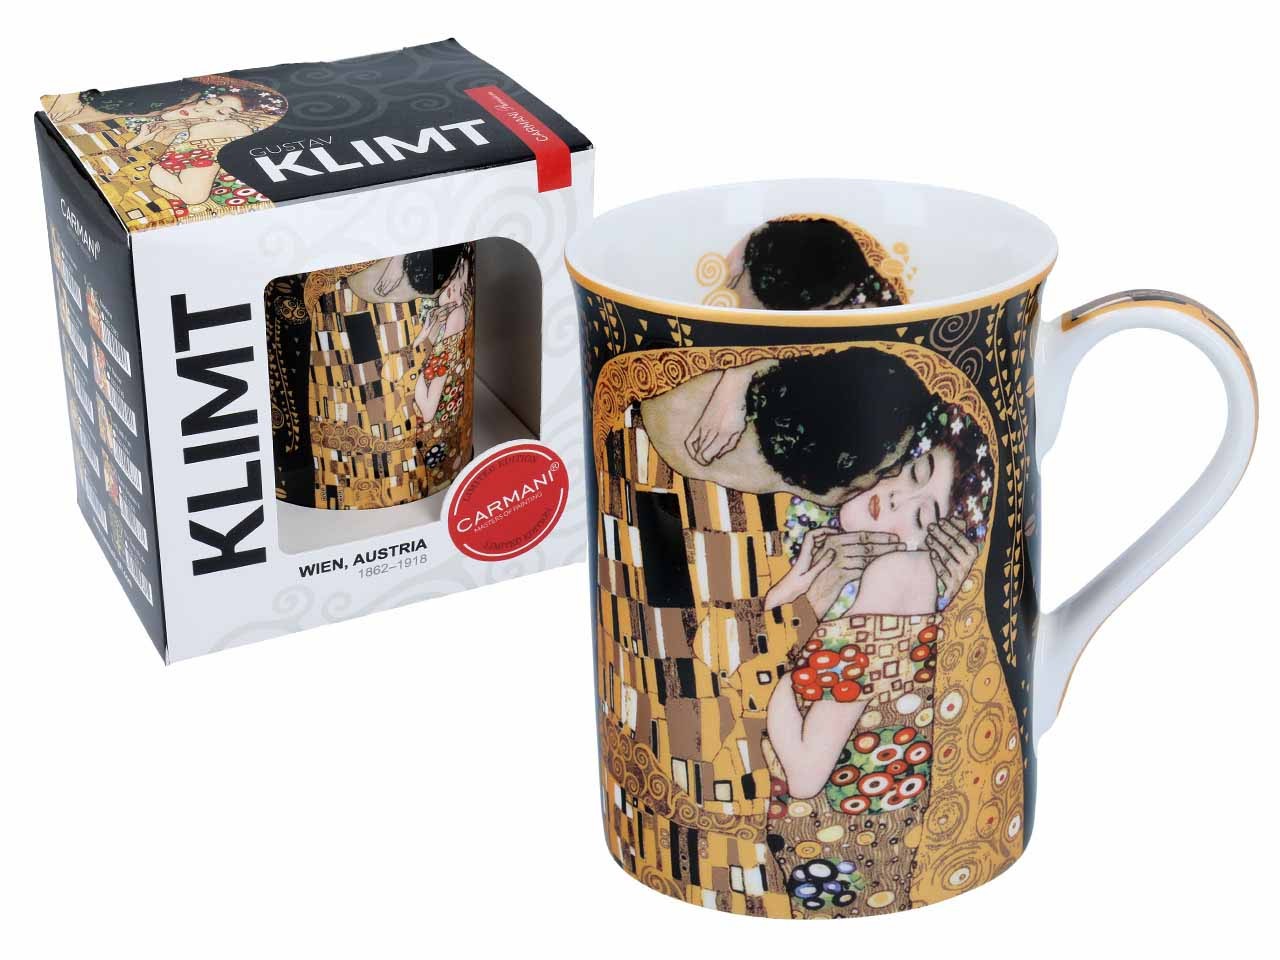 Kubek Classic New - G.Klimt The Kiss (czerń) 400ml